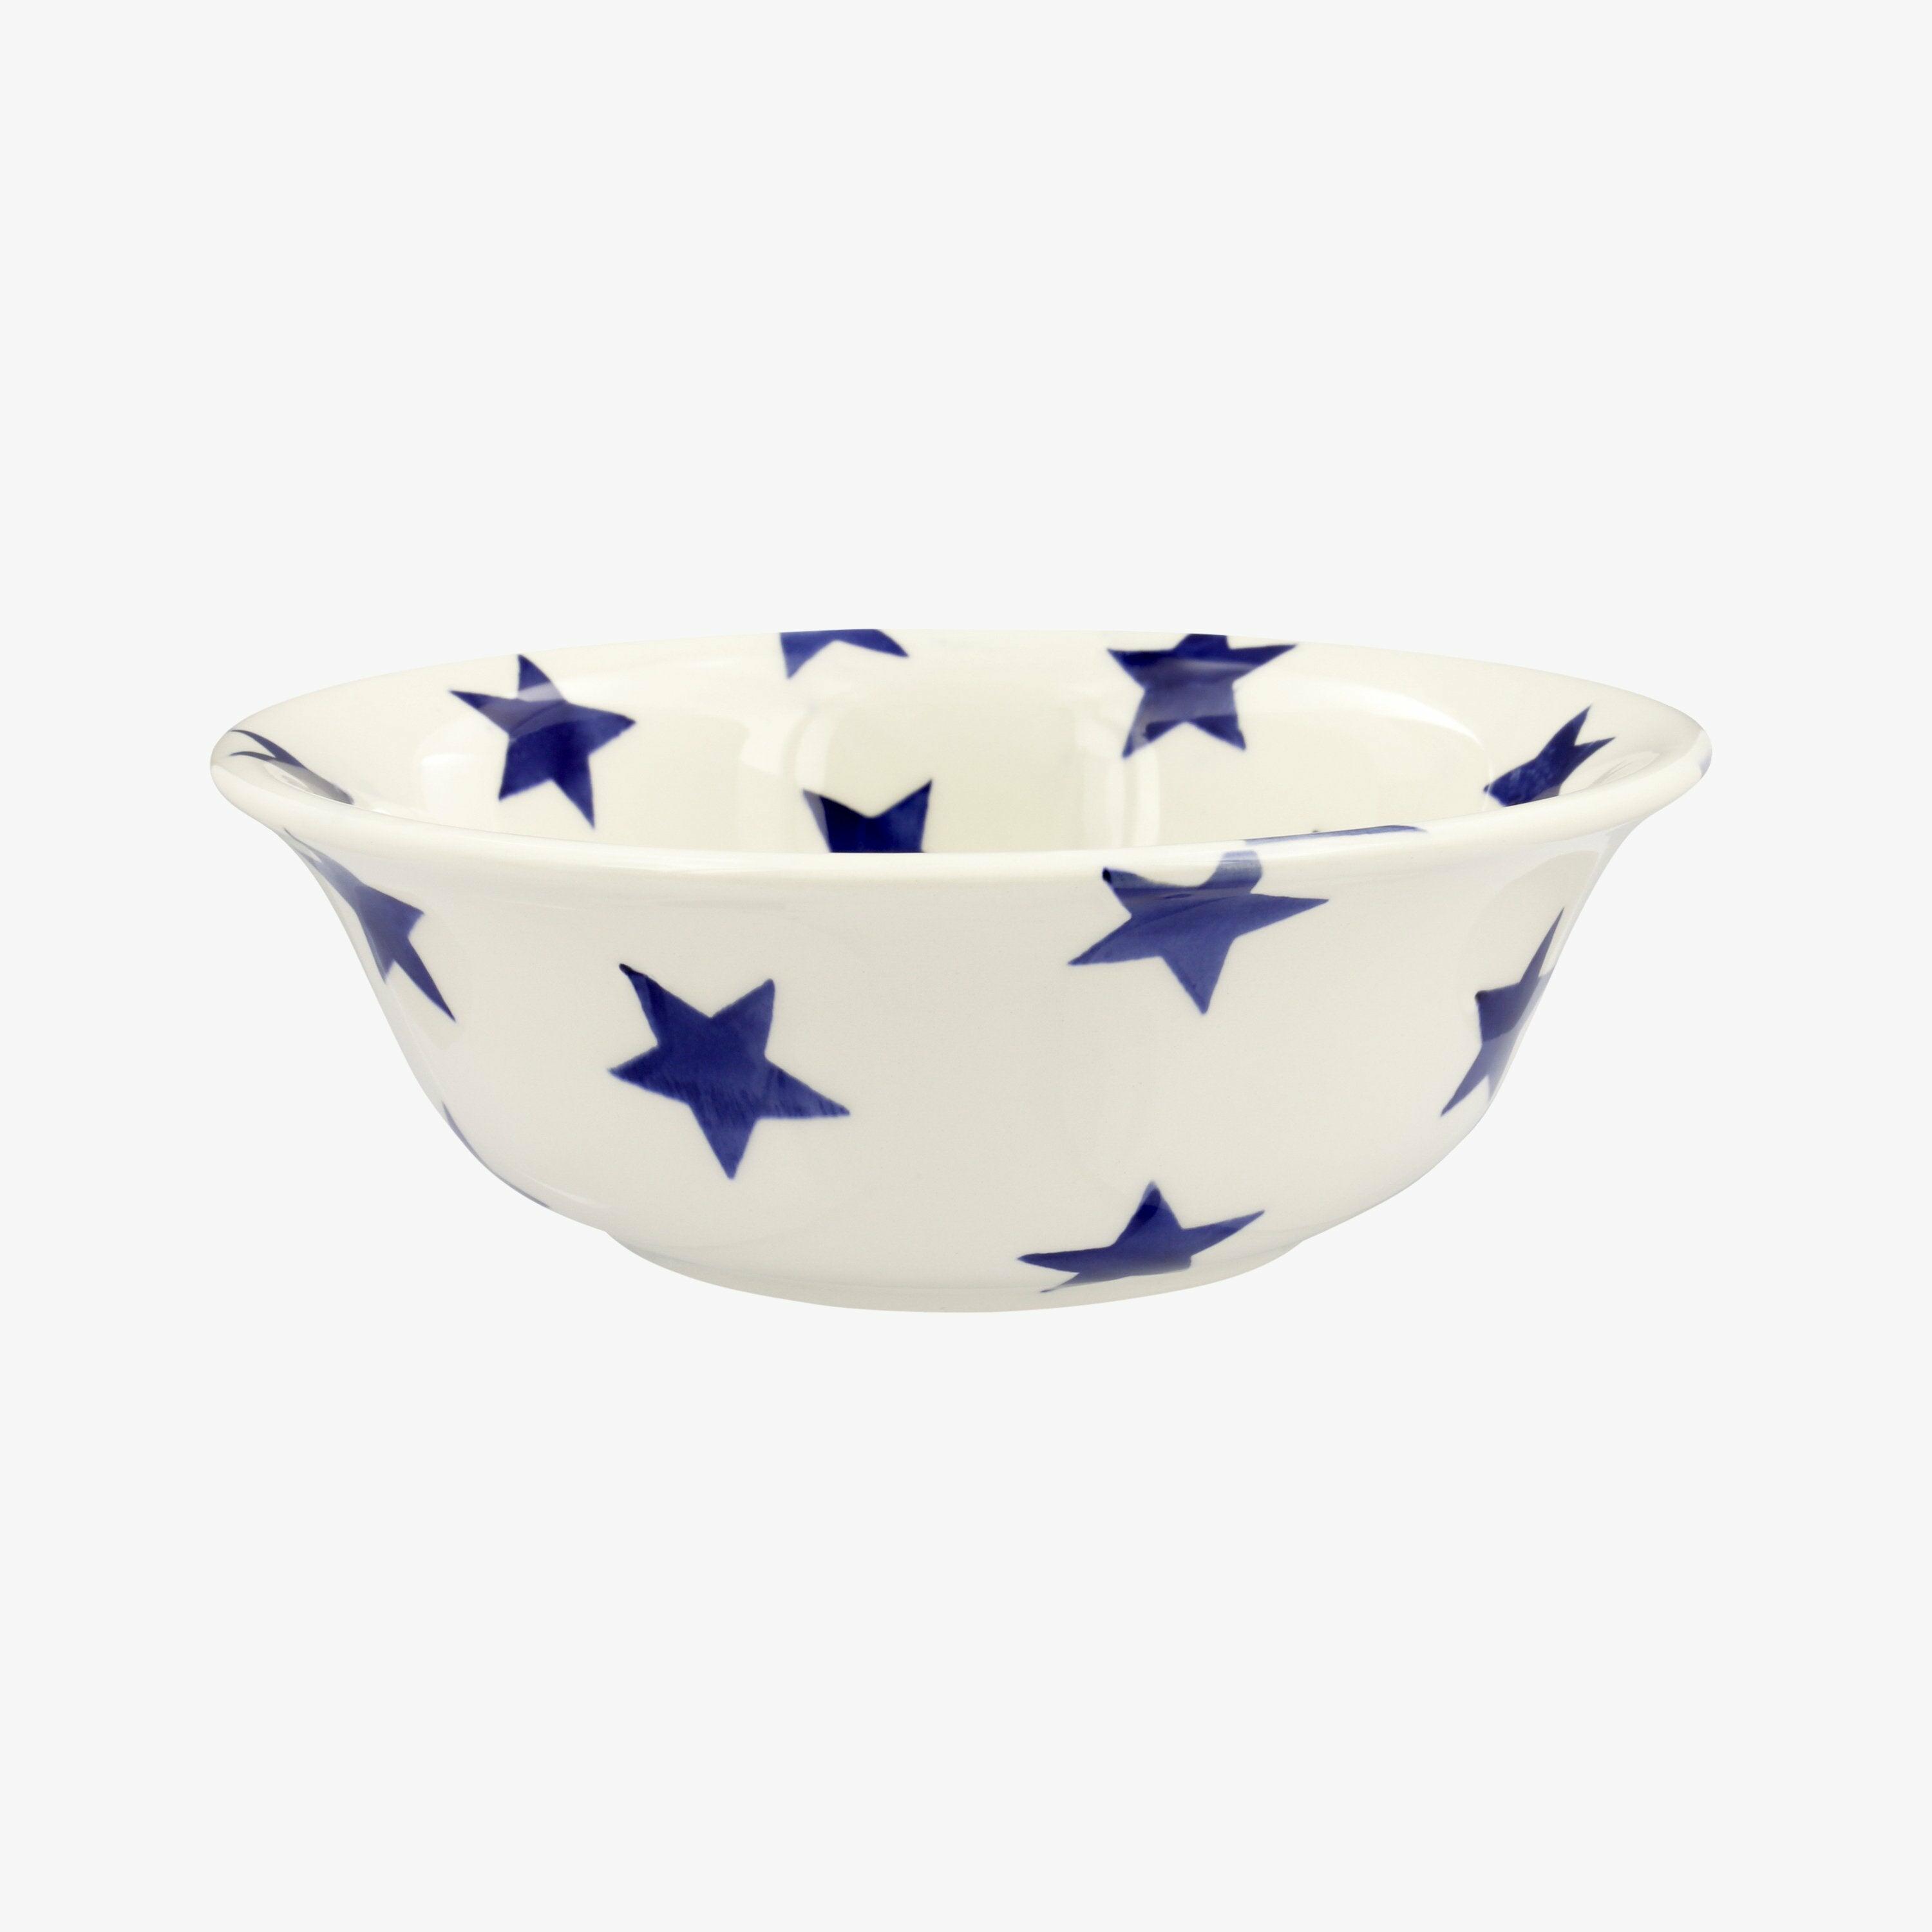 Emma Bridgewater  Seconds Blue Star Cereal Bowl - Unique Handmade & Handpainted English Earthenware Decorative Plates